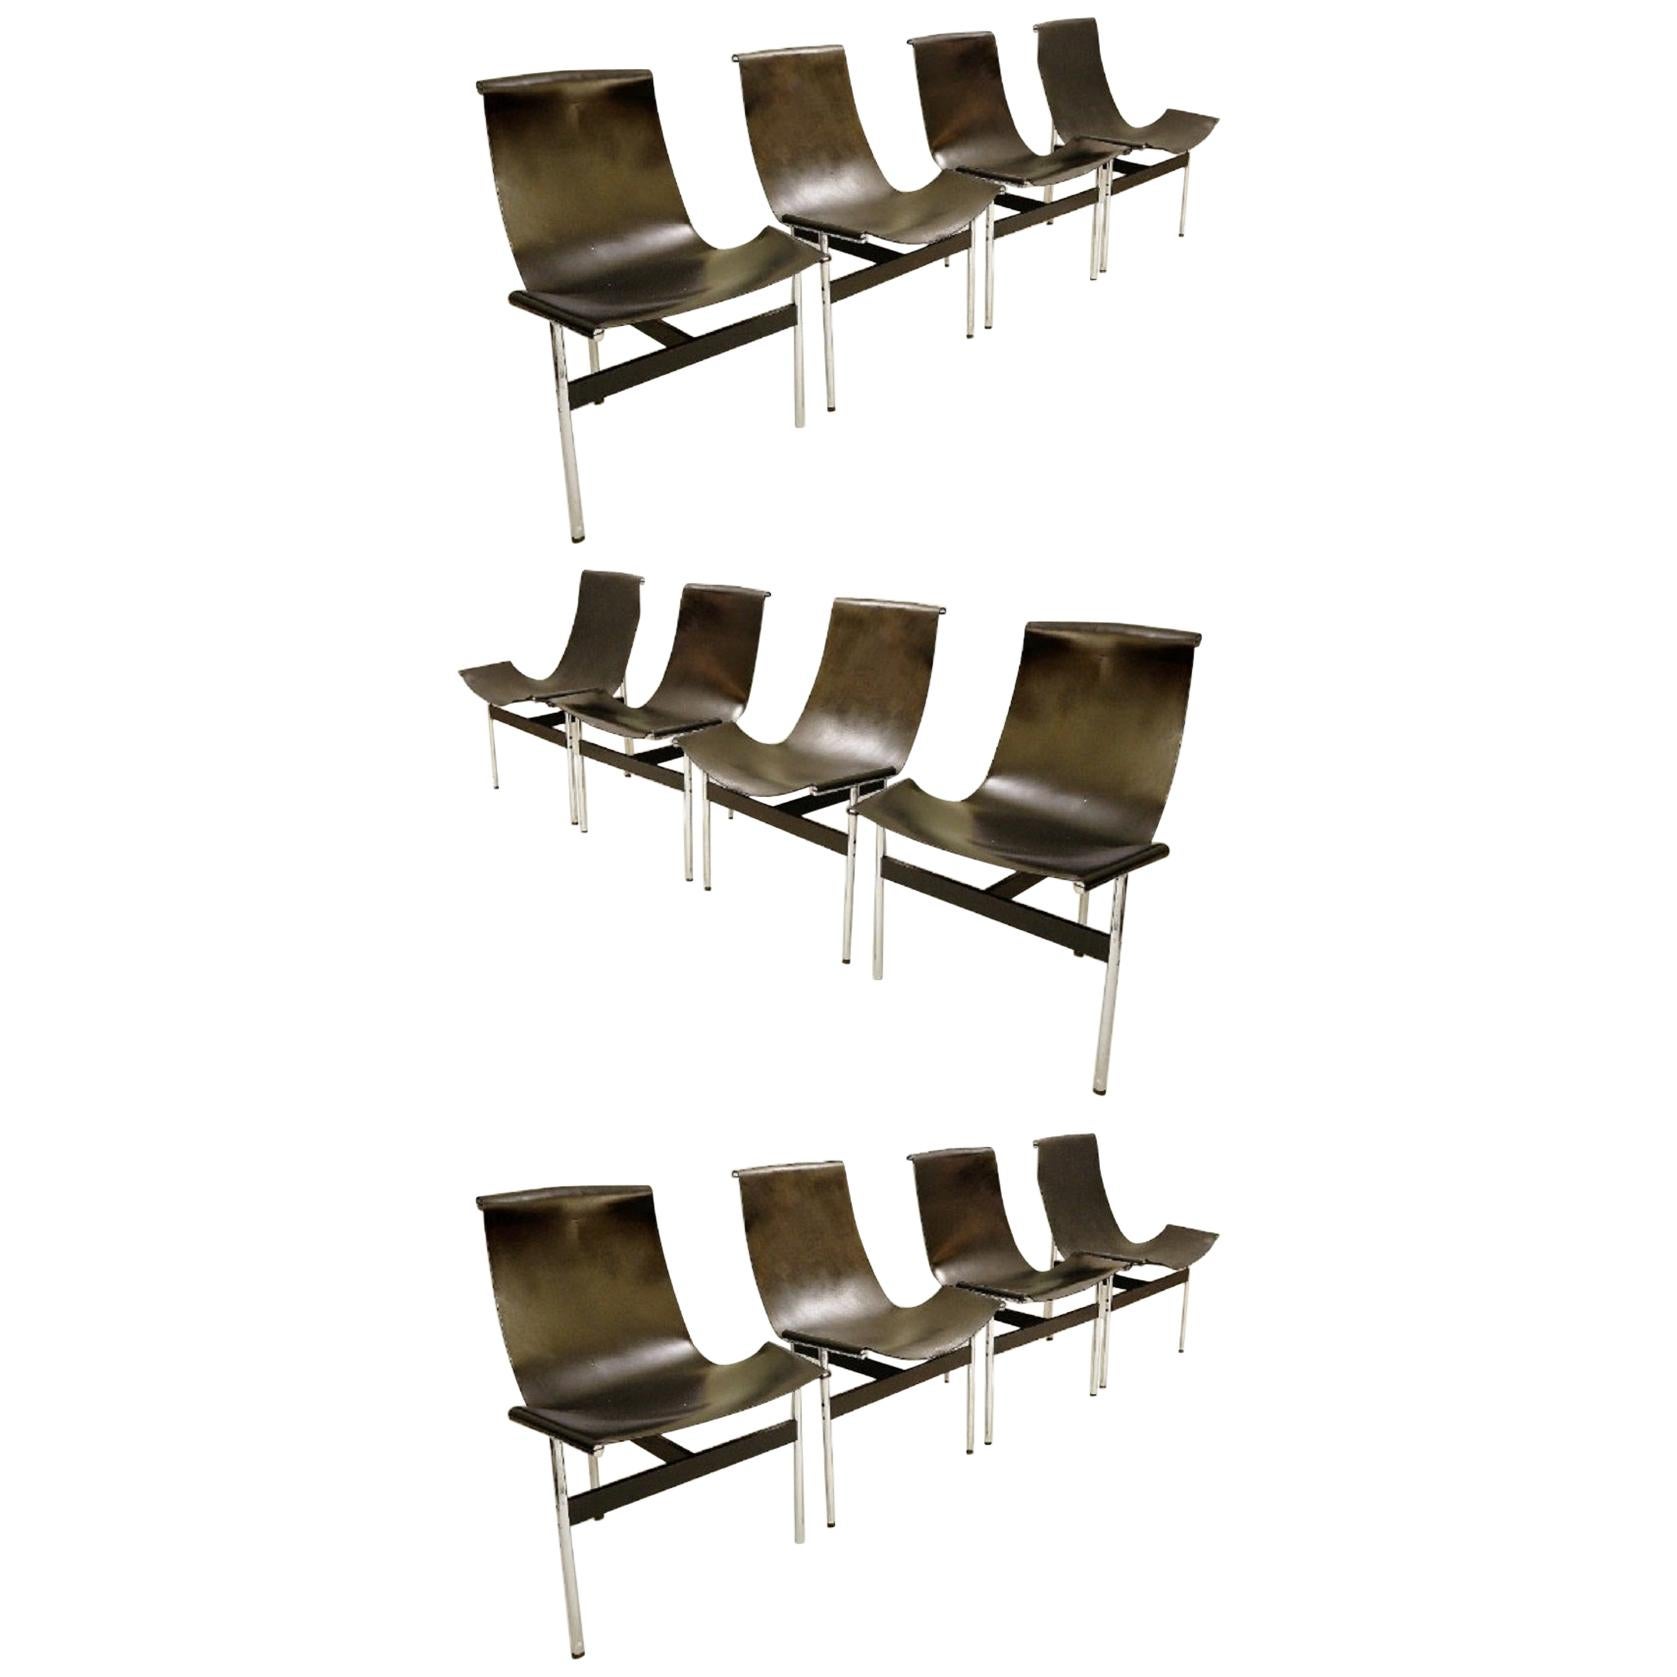 Douglas Kelly, Ross Littell and William Katavolos "T" Chairs, Set of 12